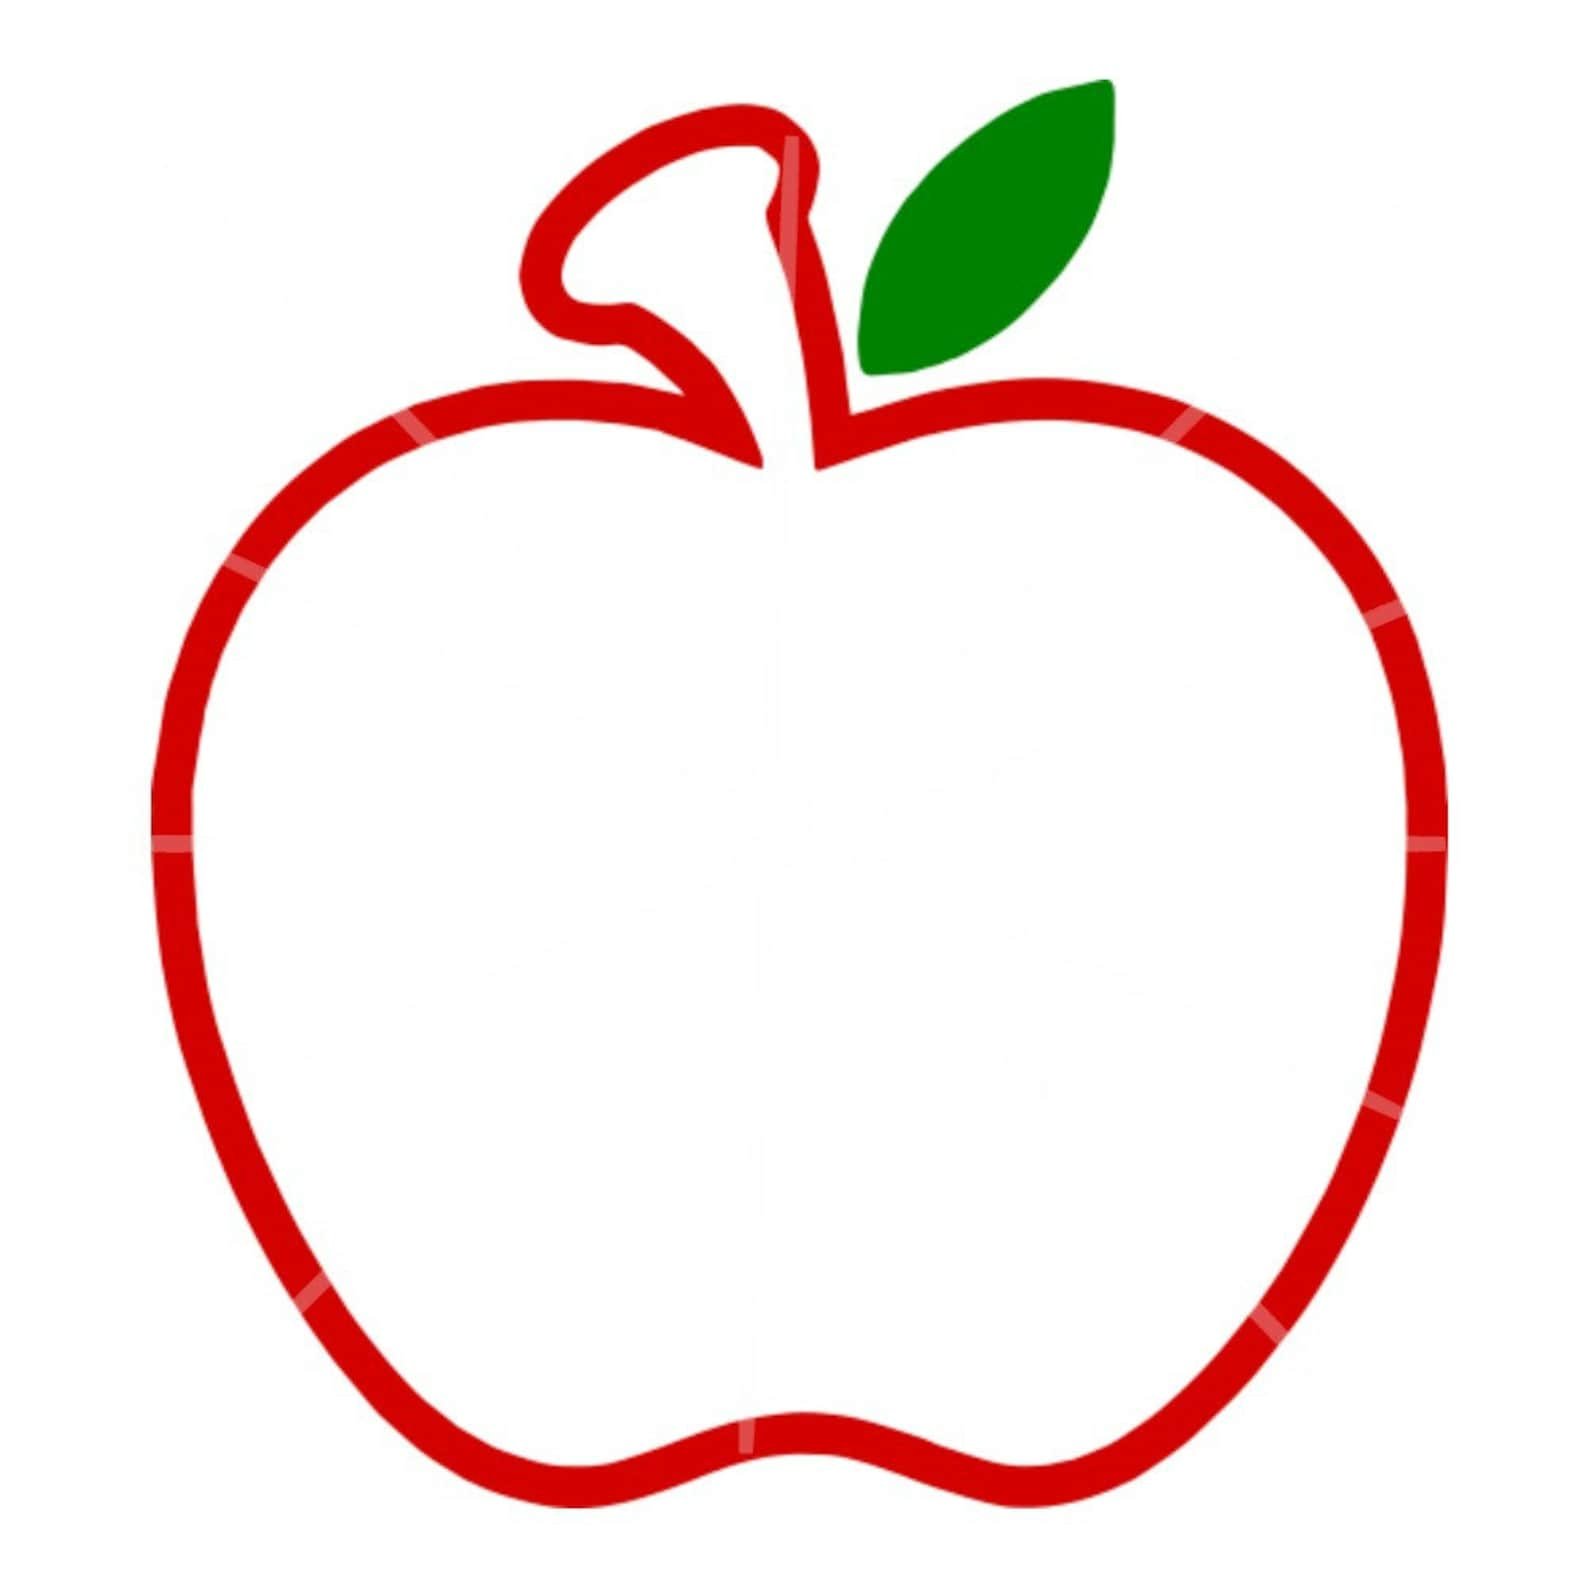 Аппликация яблоко